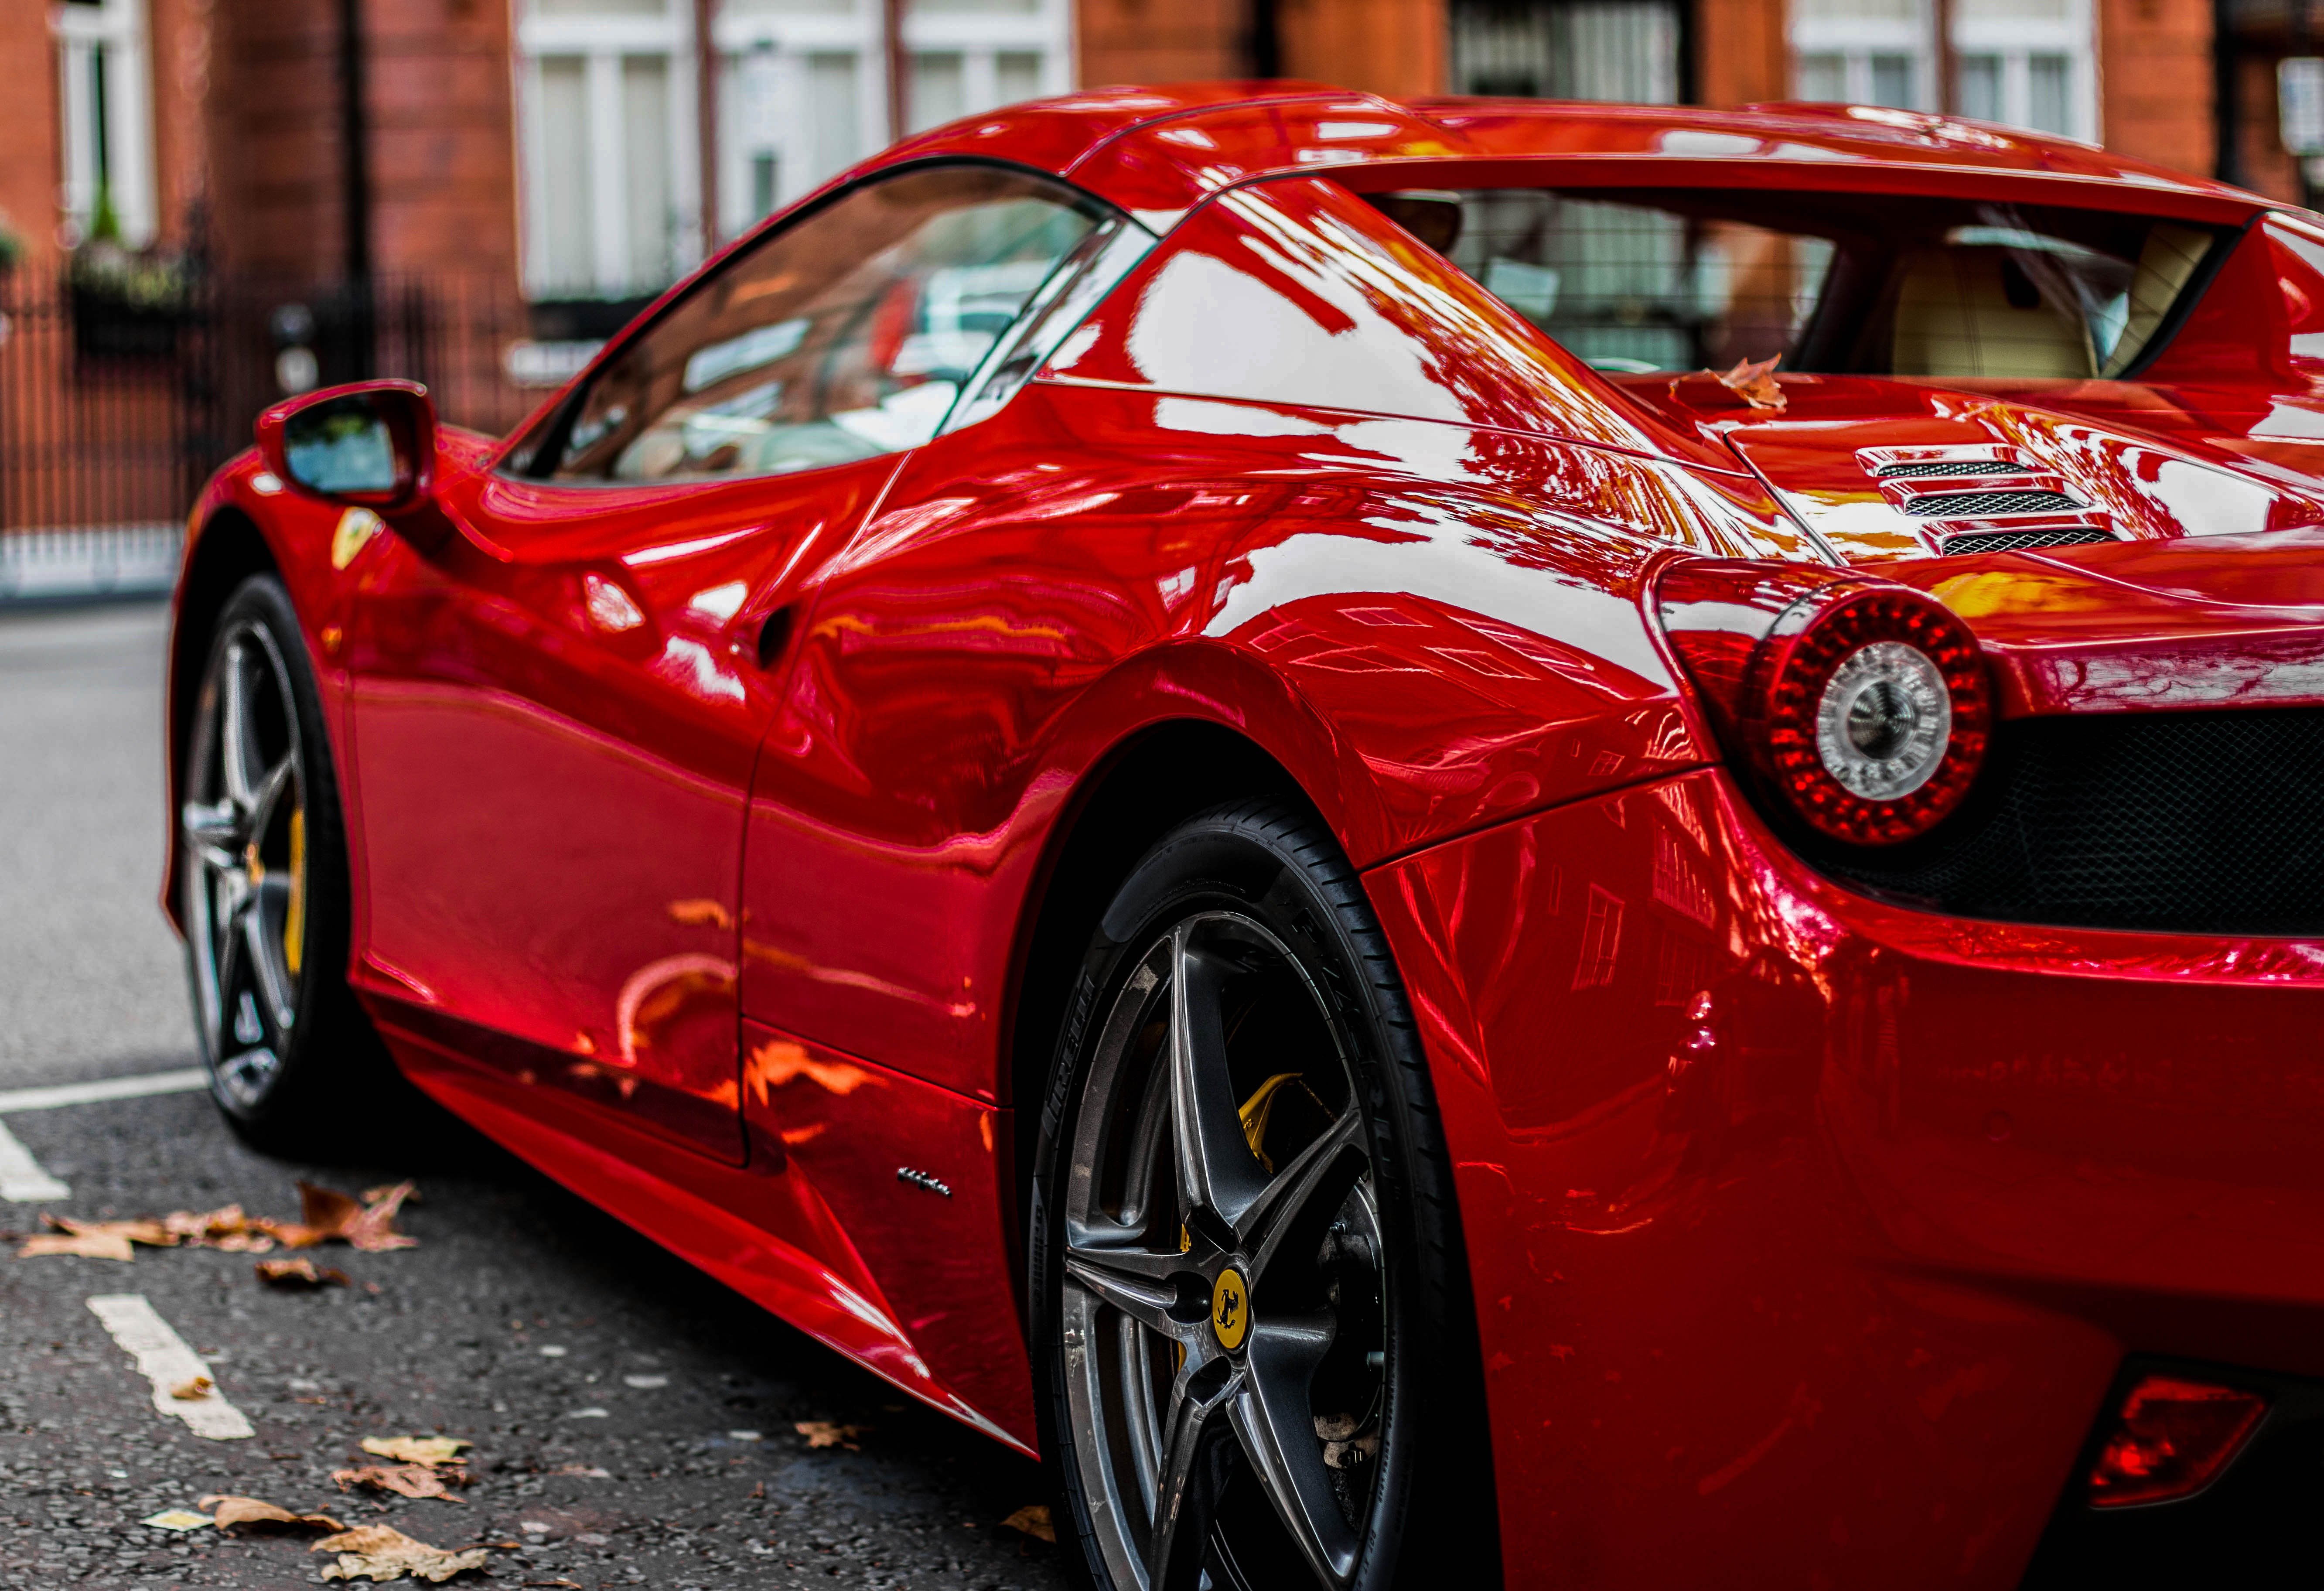 Ferrari x. Феррари 428. Машина Феррари красная. Феррари спорткар красный. Красная Феррари 458.